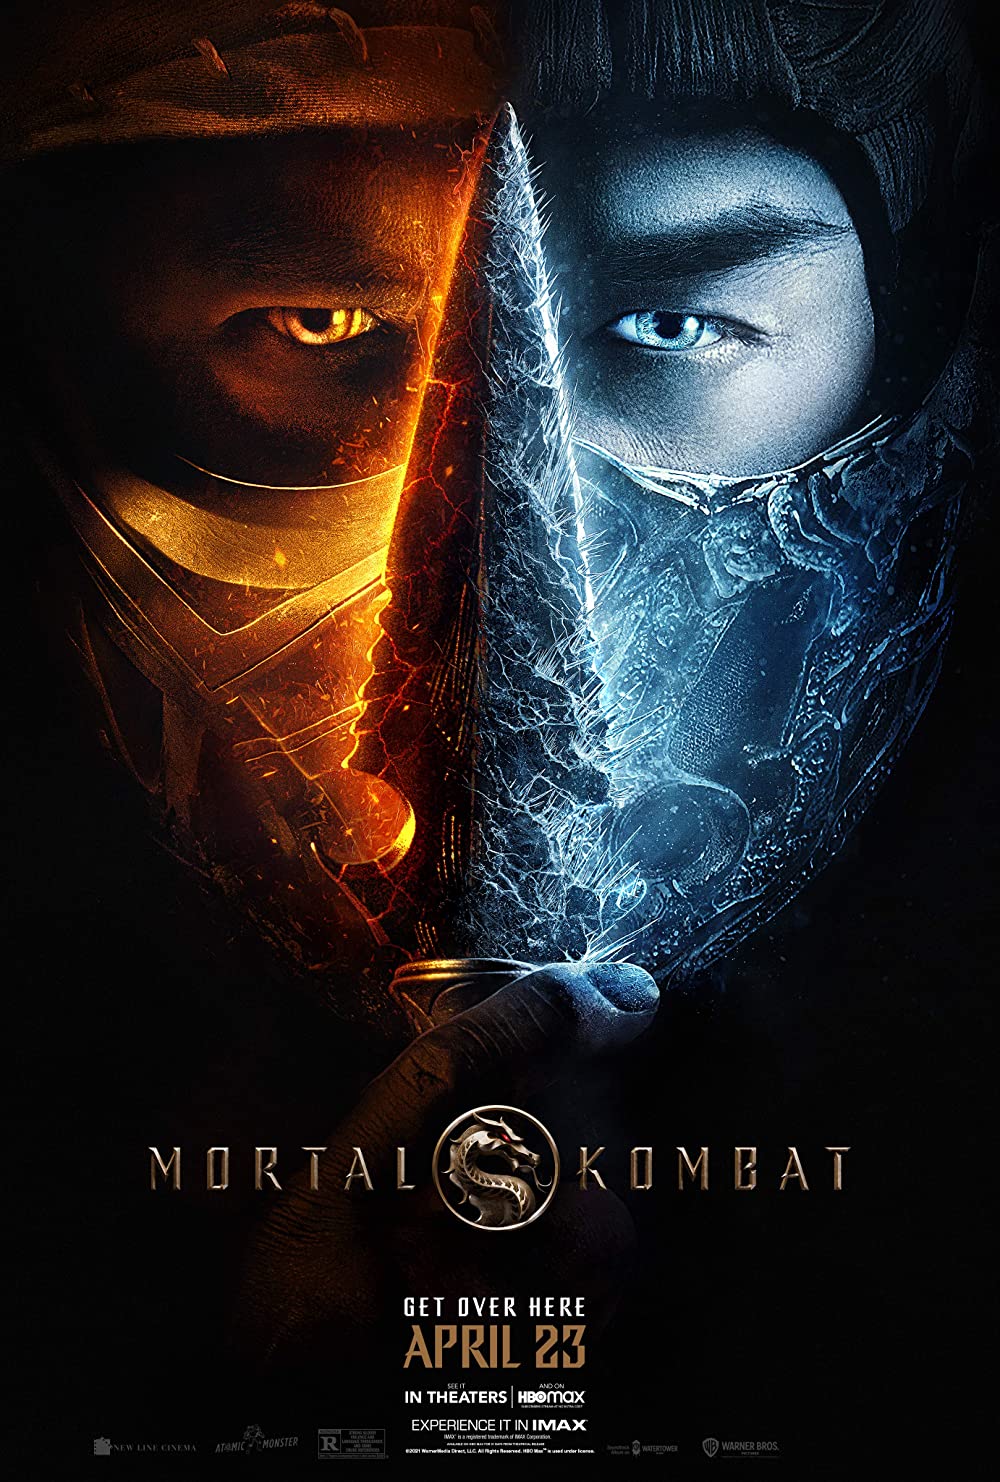 Filmbeschreibung zu Mortal Kombat (OV)